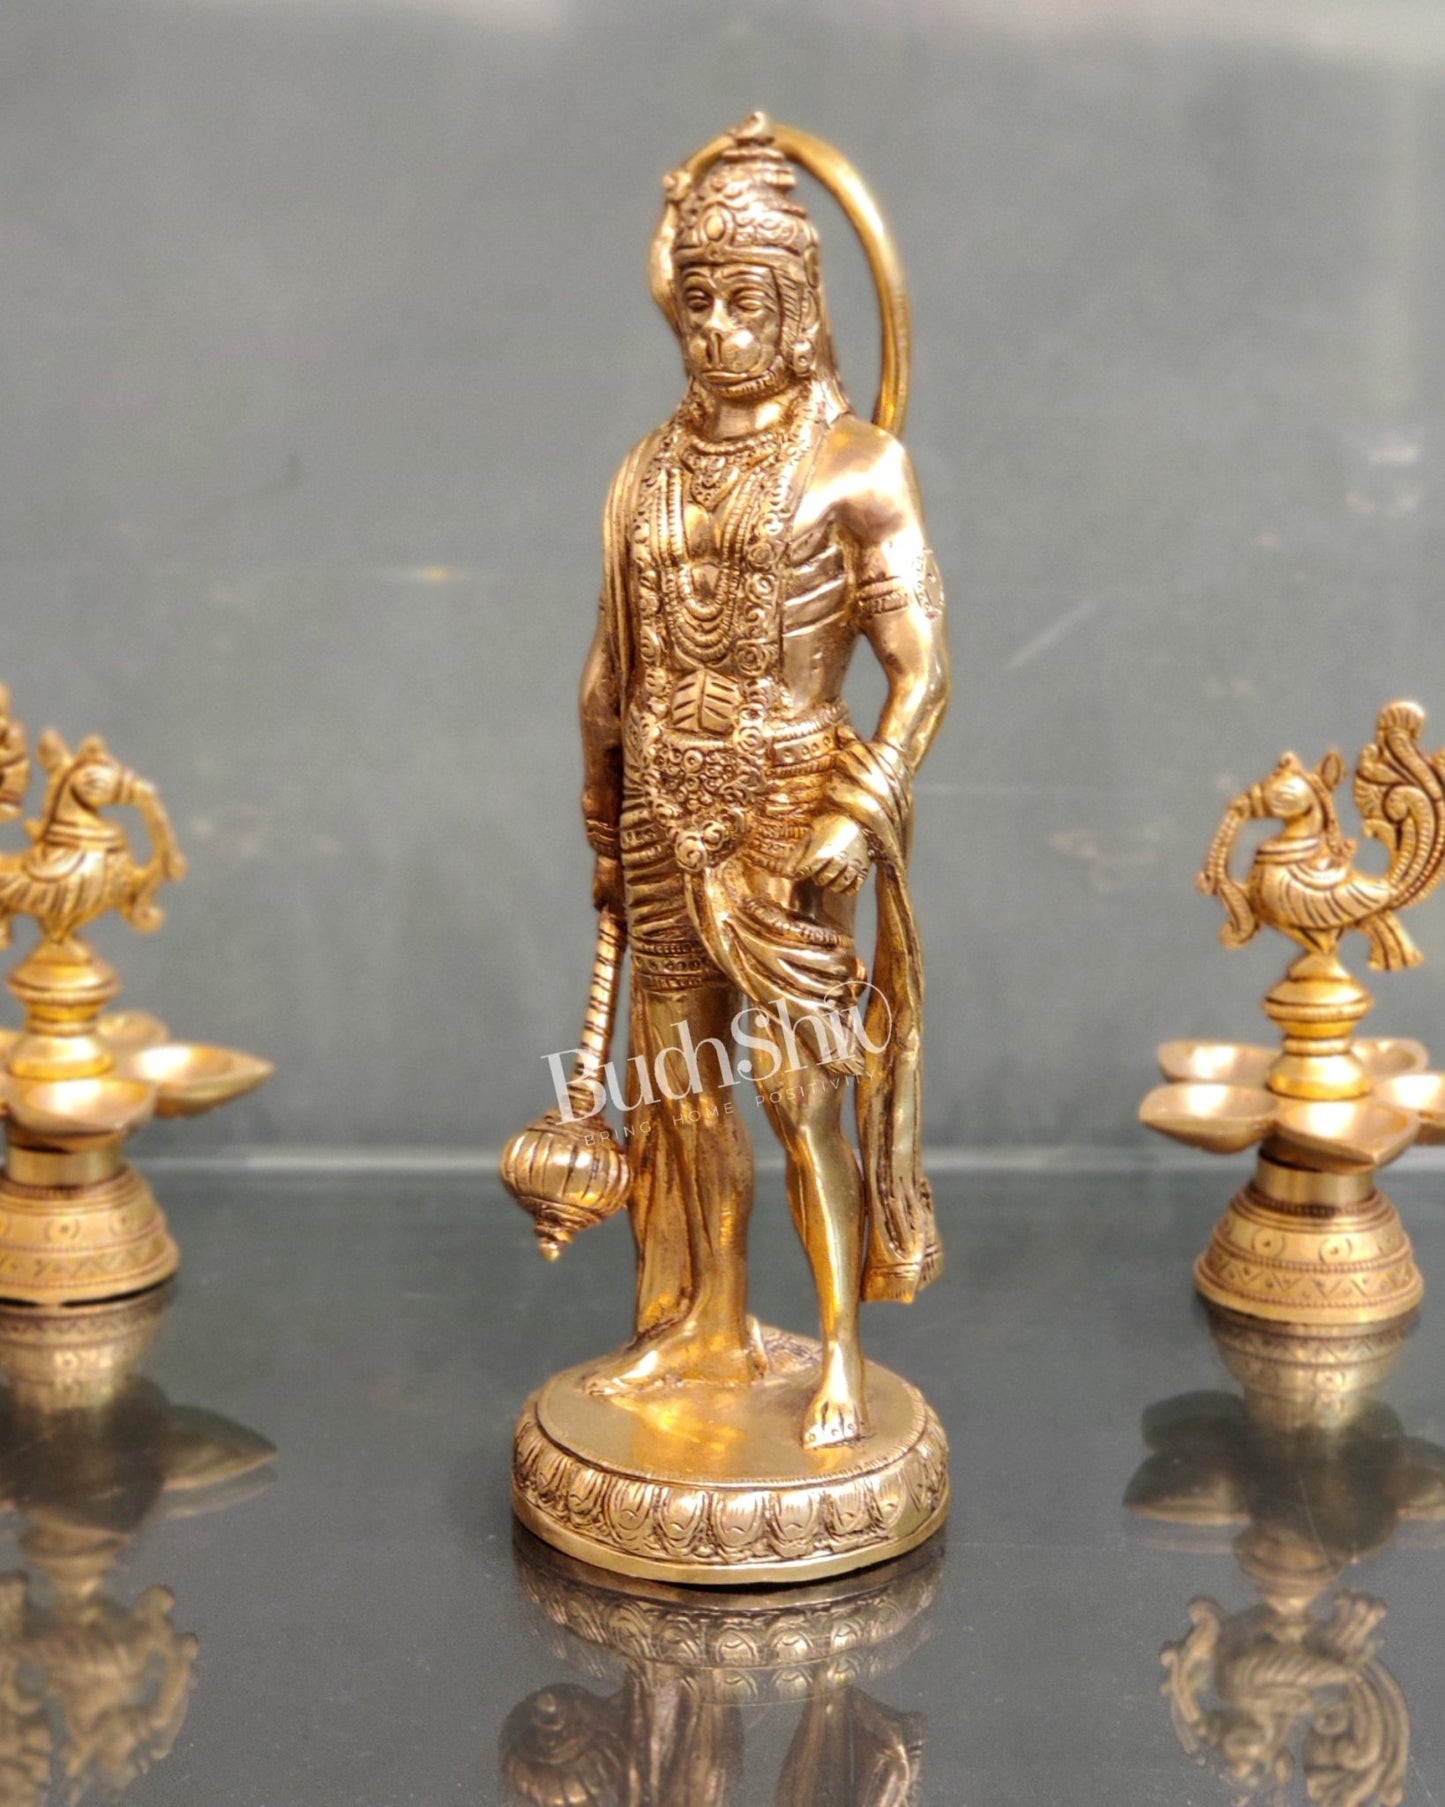 Handmade Brass Lord Hanuman Statue | 10" Height - Budhshiv.com